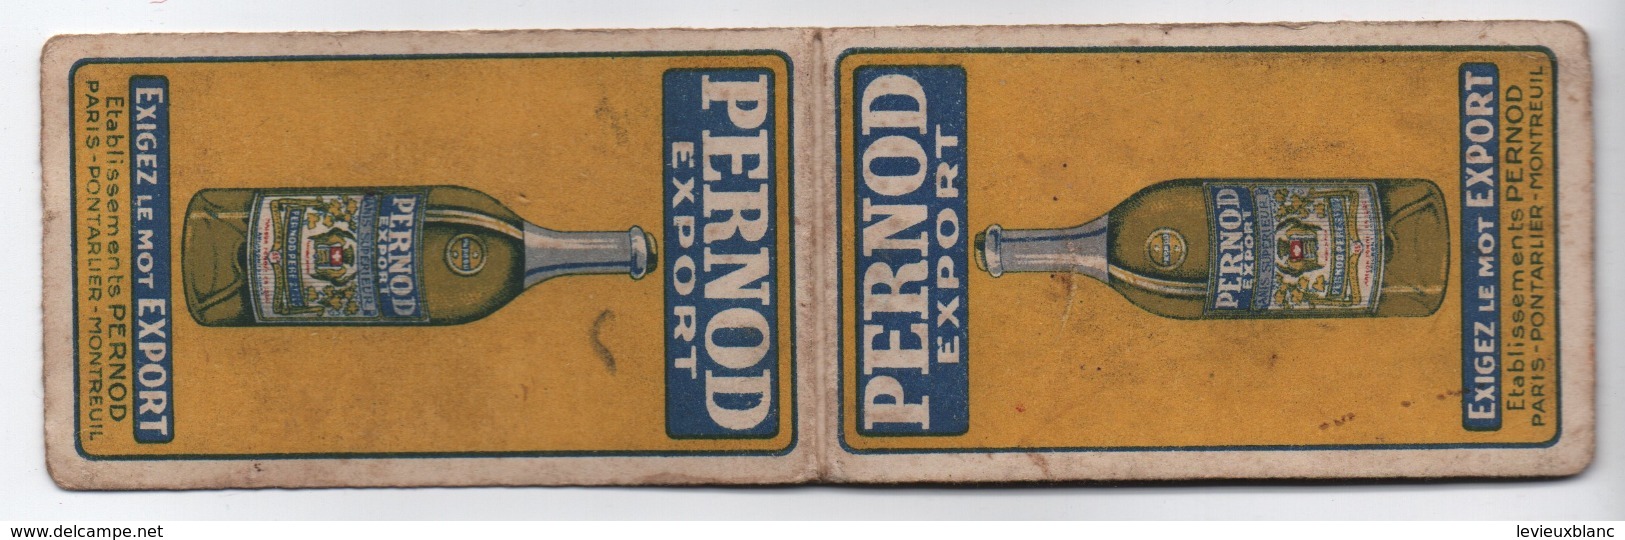 Petit Carnet Publicitaire/ Pernod Export/Exigez Le Mot Export/Paris - Pontarlier -Montreuil / Vers 1930        VPN241 - Otros & Sin Clasificación